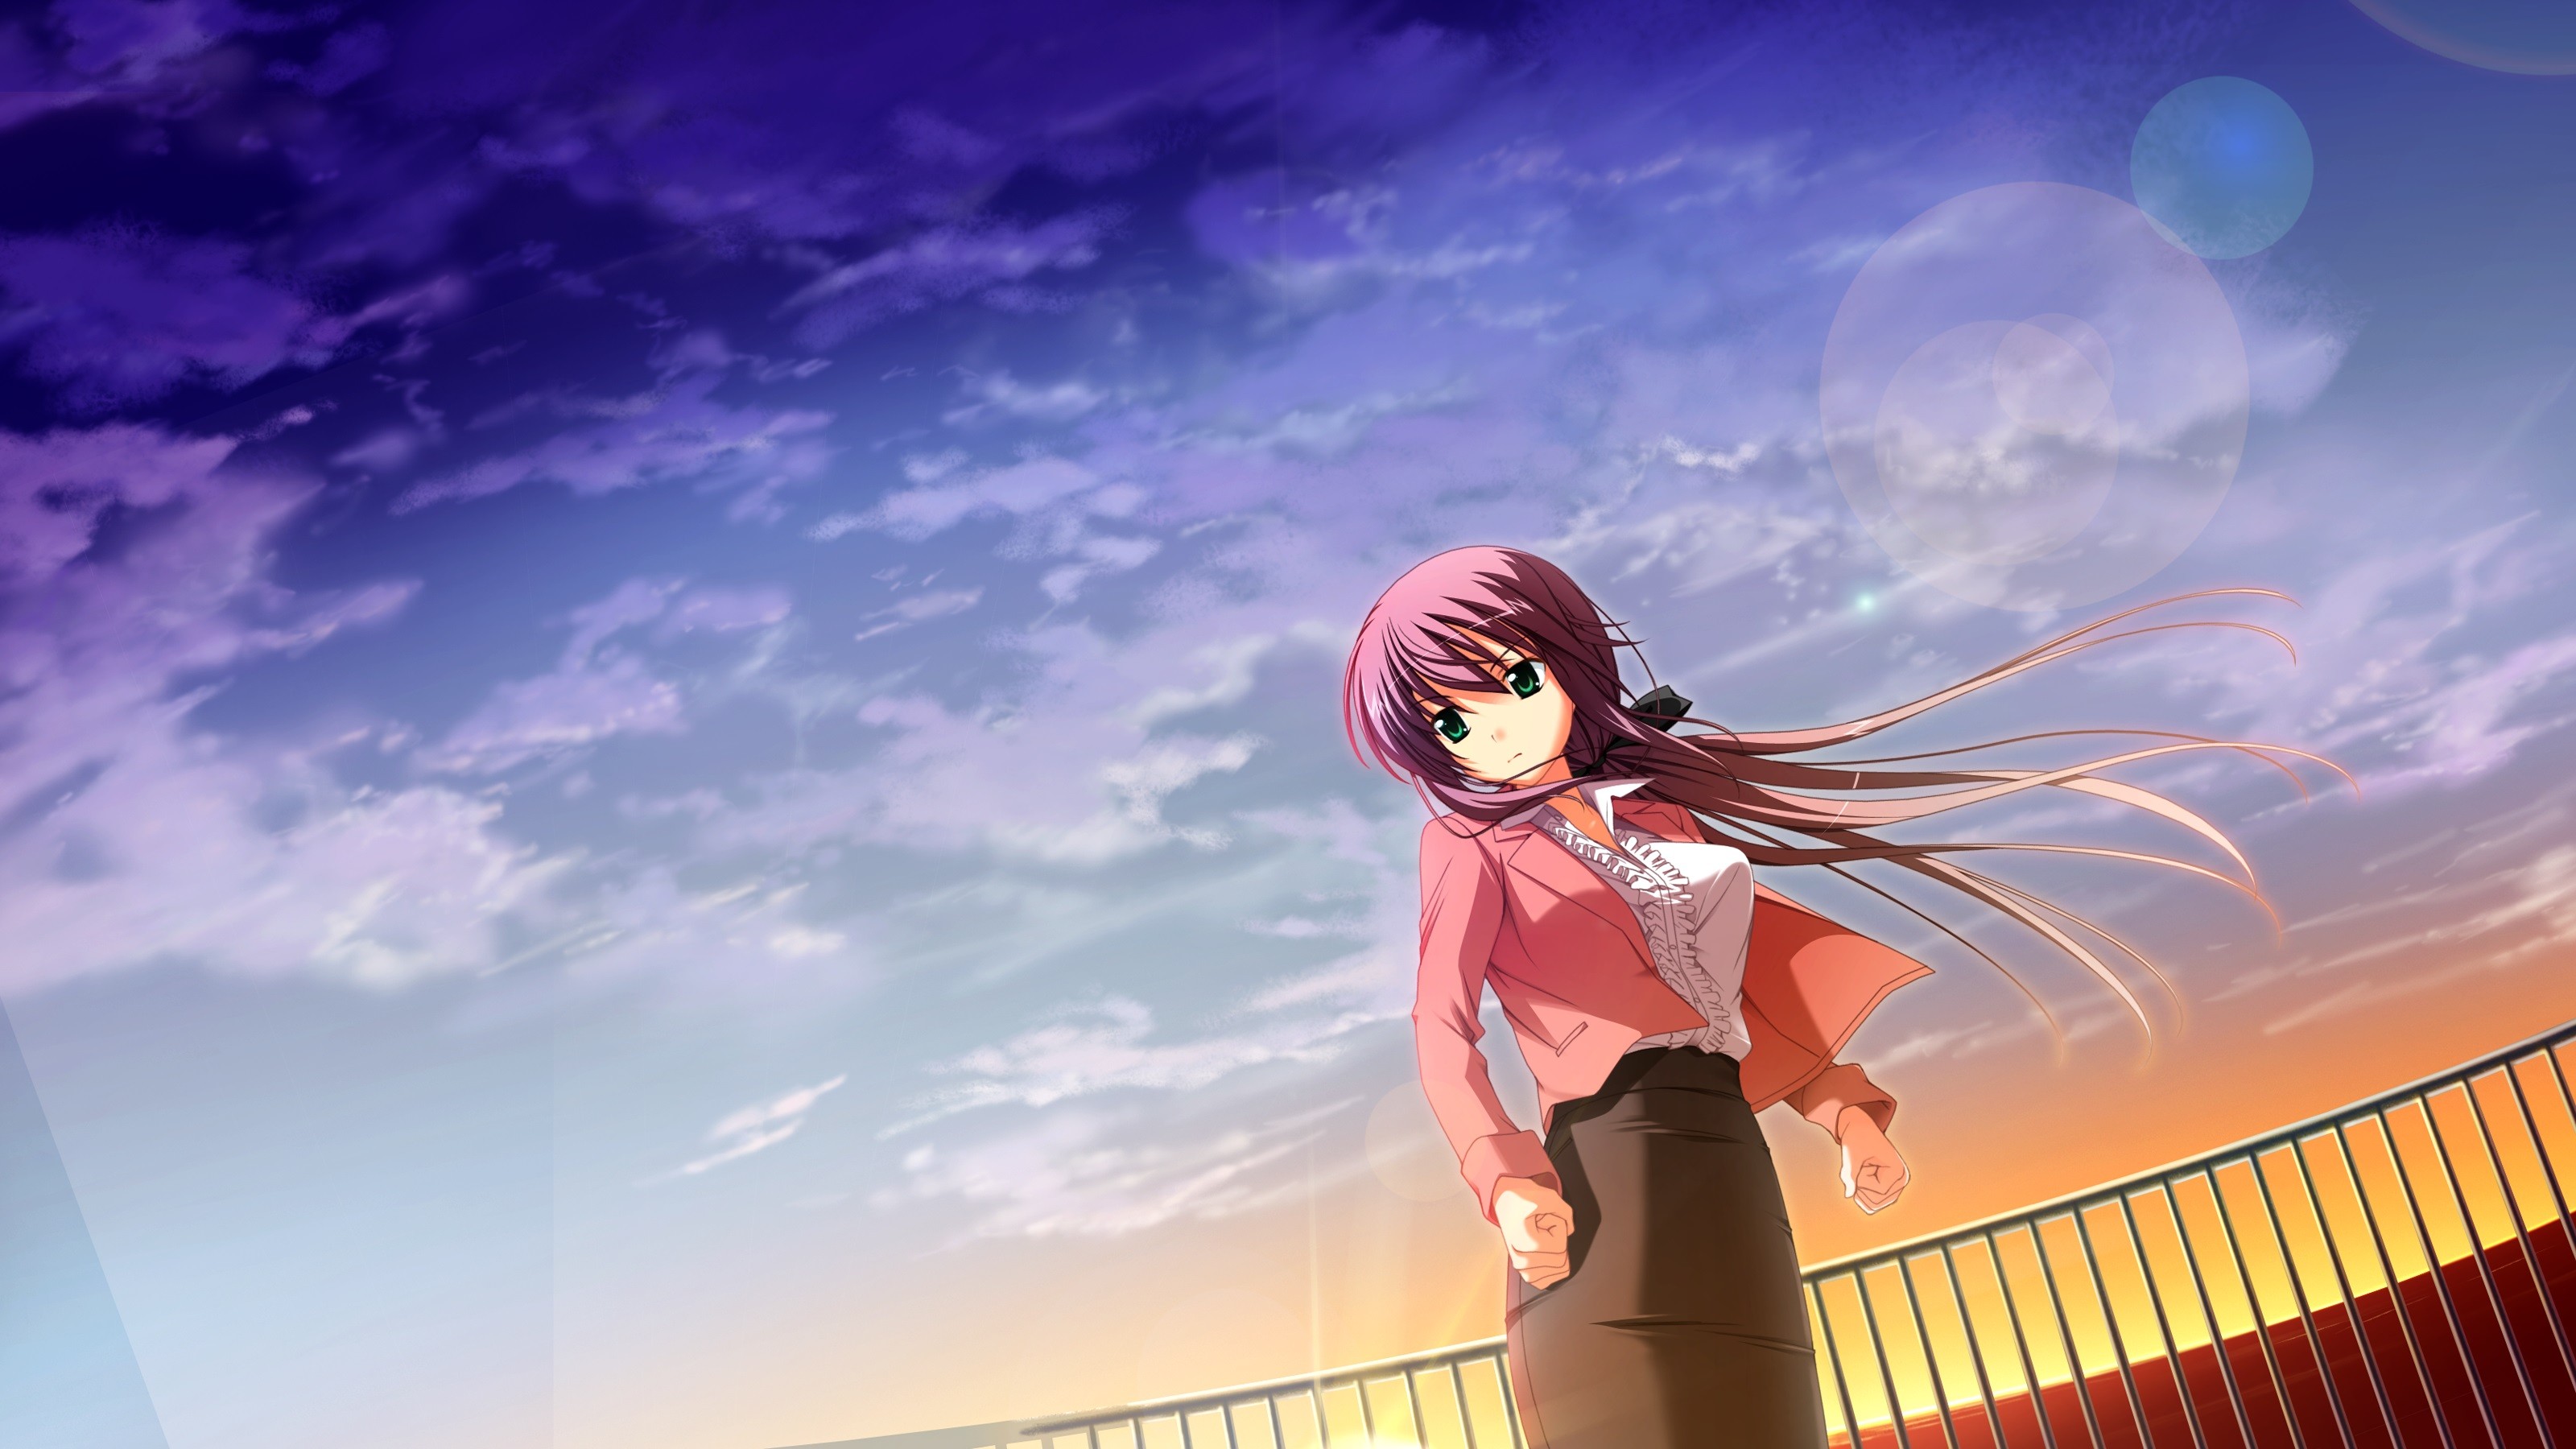 Anime 3200x1800 anime girls long hair sunset clouds Game CG women outdoors windy fist sky anime